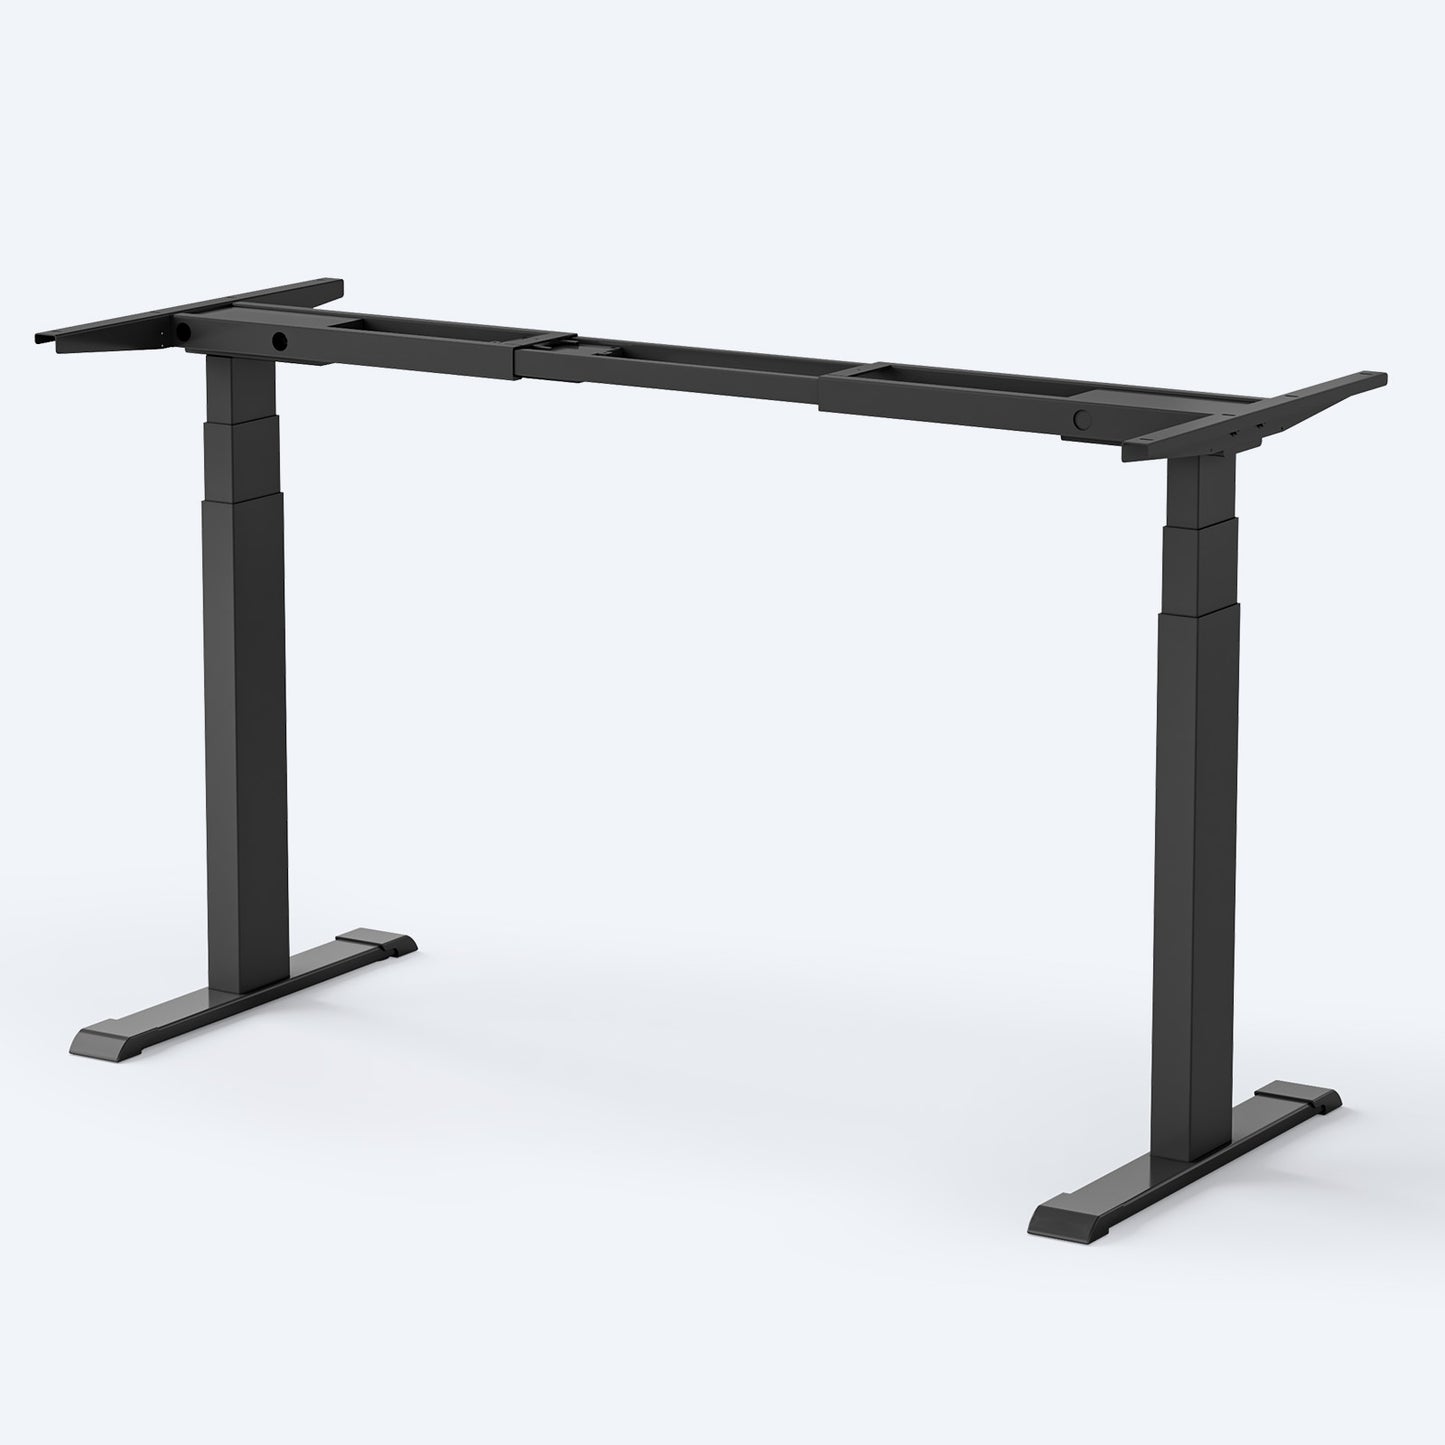 OdinLake Standing Desk S450 Frame